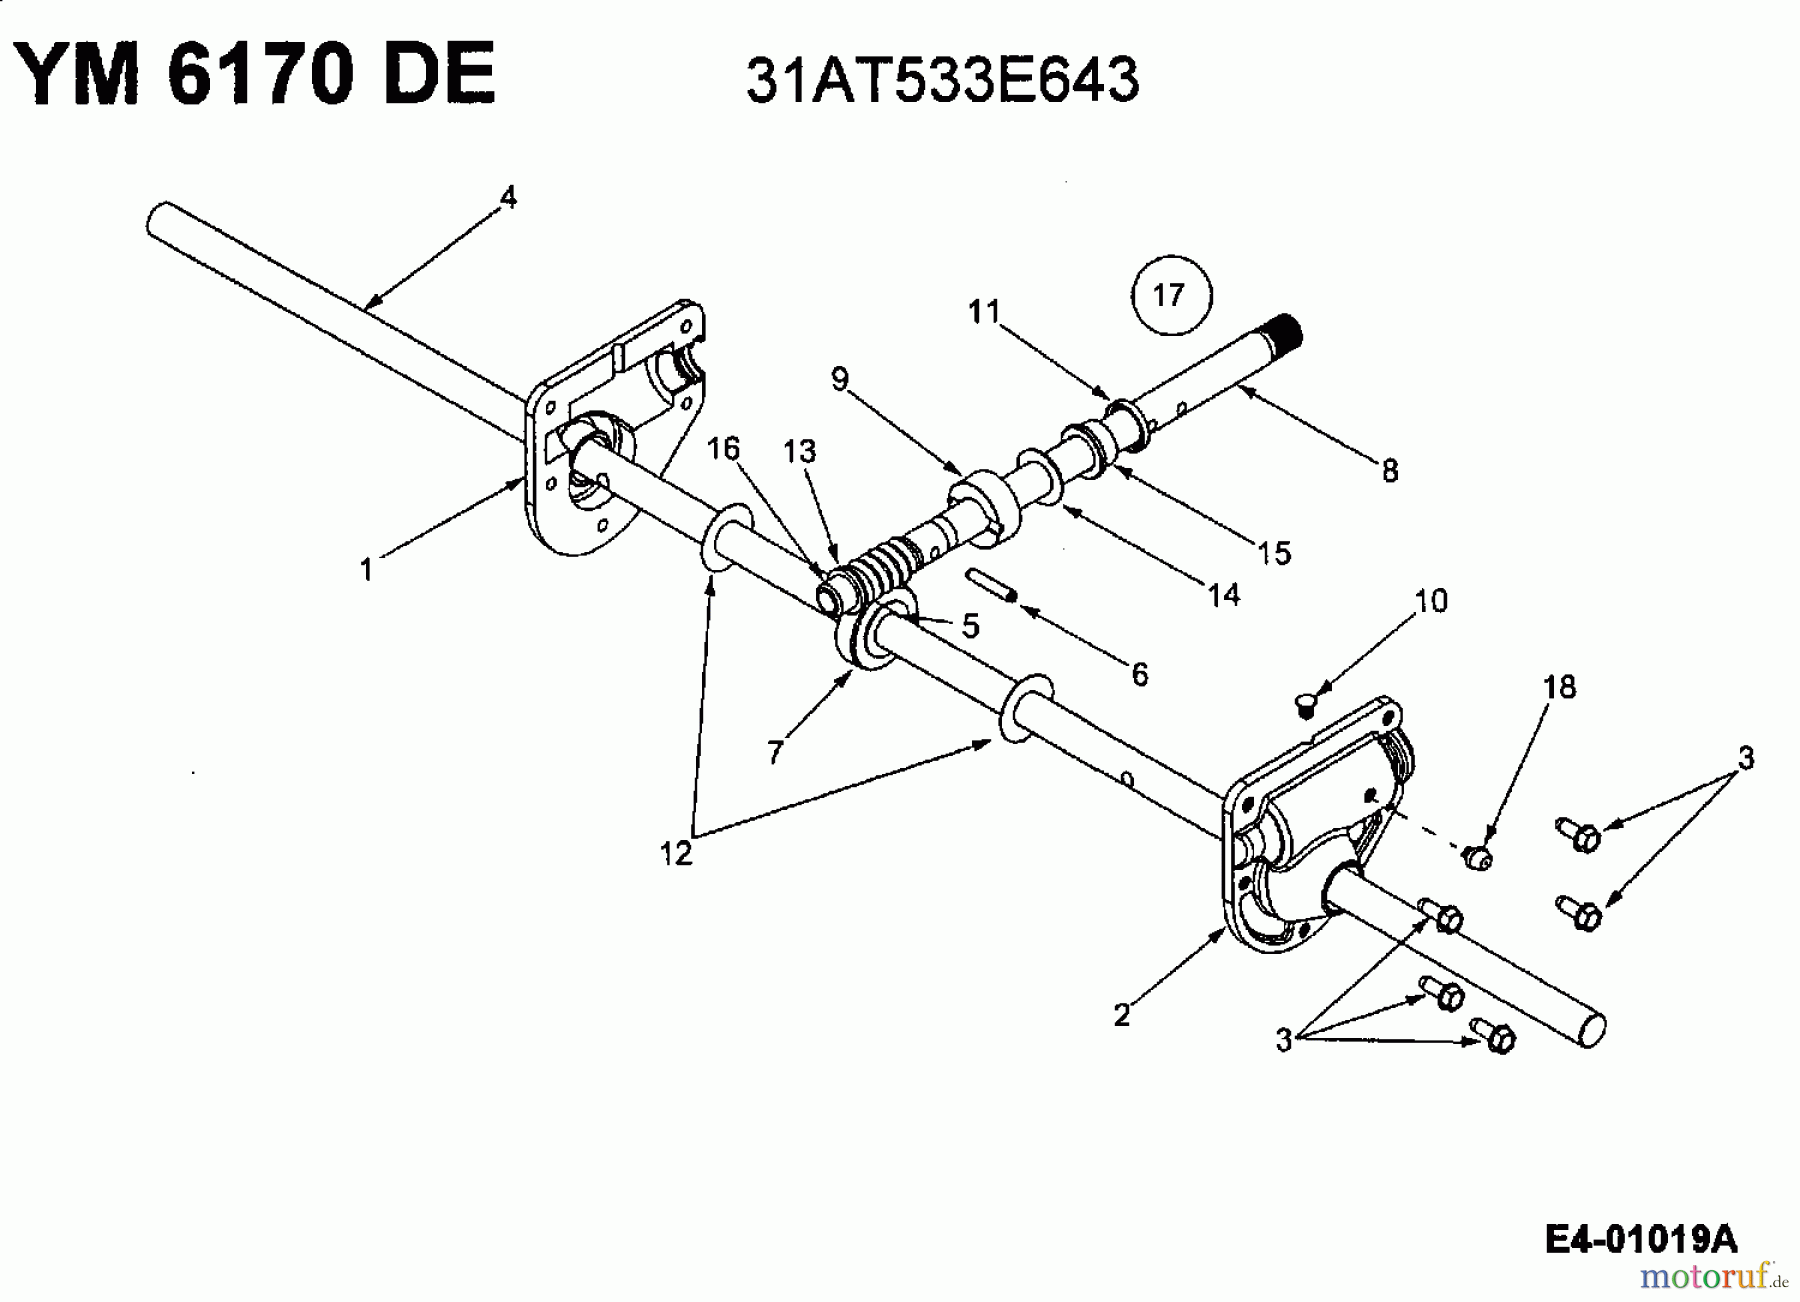  Yard-Man Schneefräsen E 533 E 31AE533E643  (2000) Schneckengetriebe